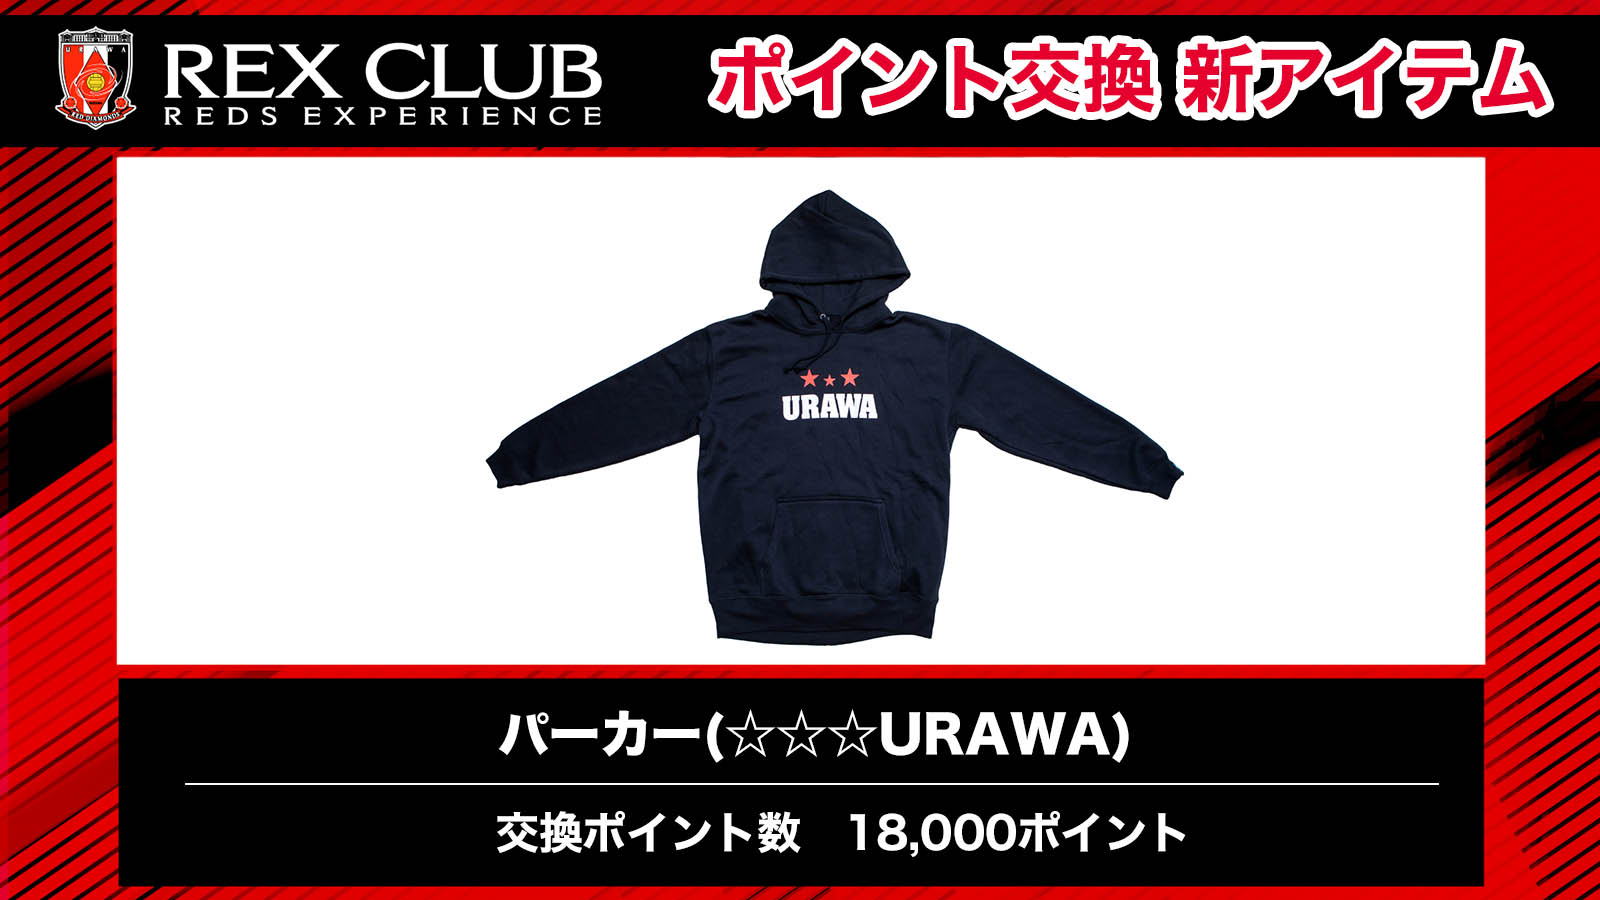 REX CLUB】ポイント交換新アイテム 「パーカー(URAWA)」 | URAWA RED